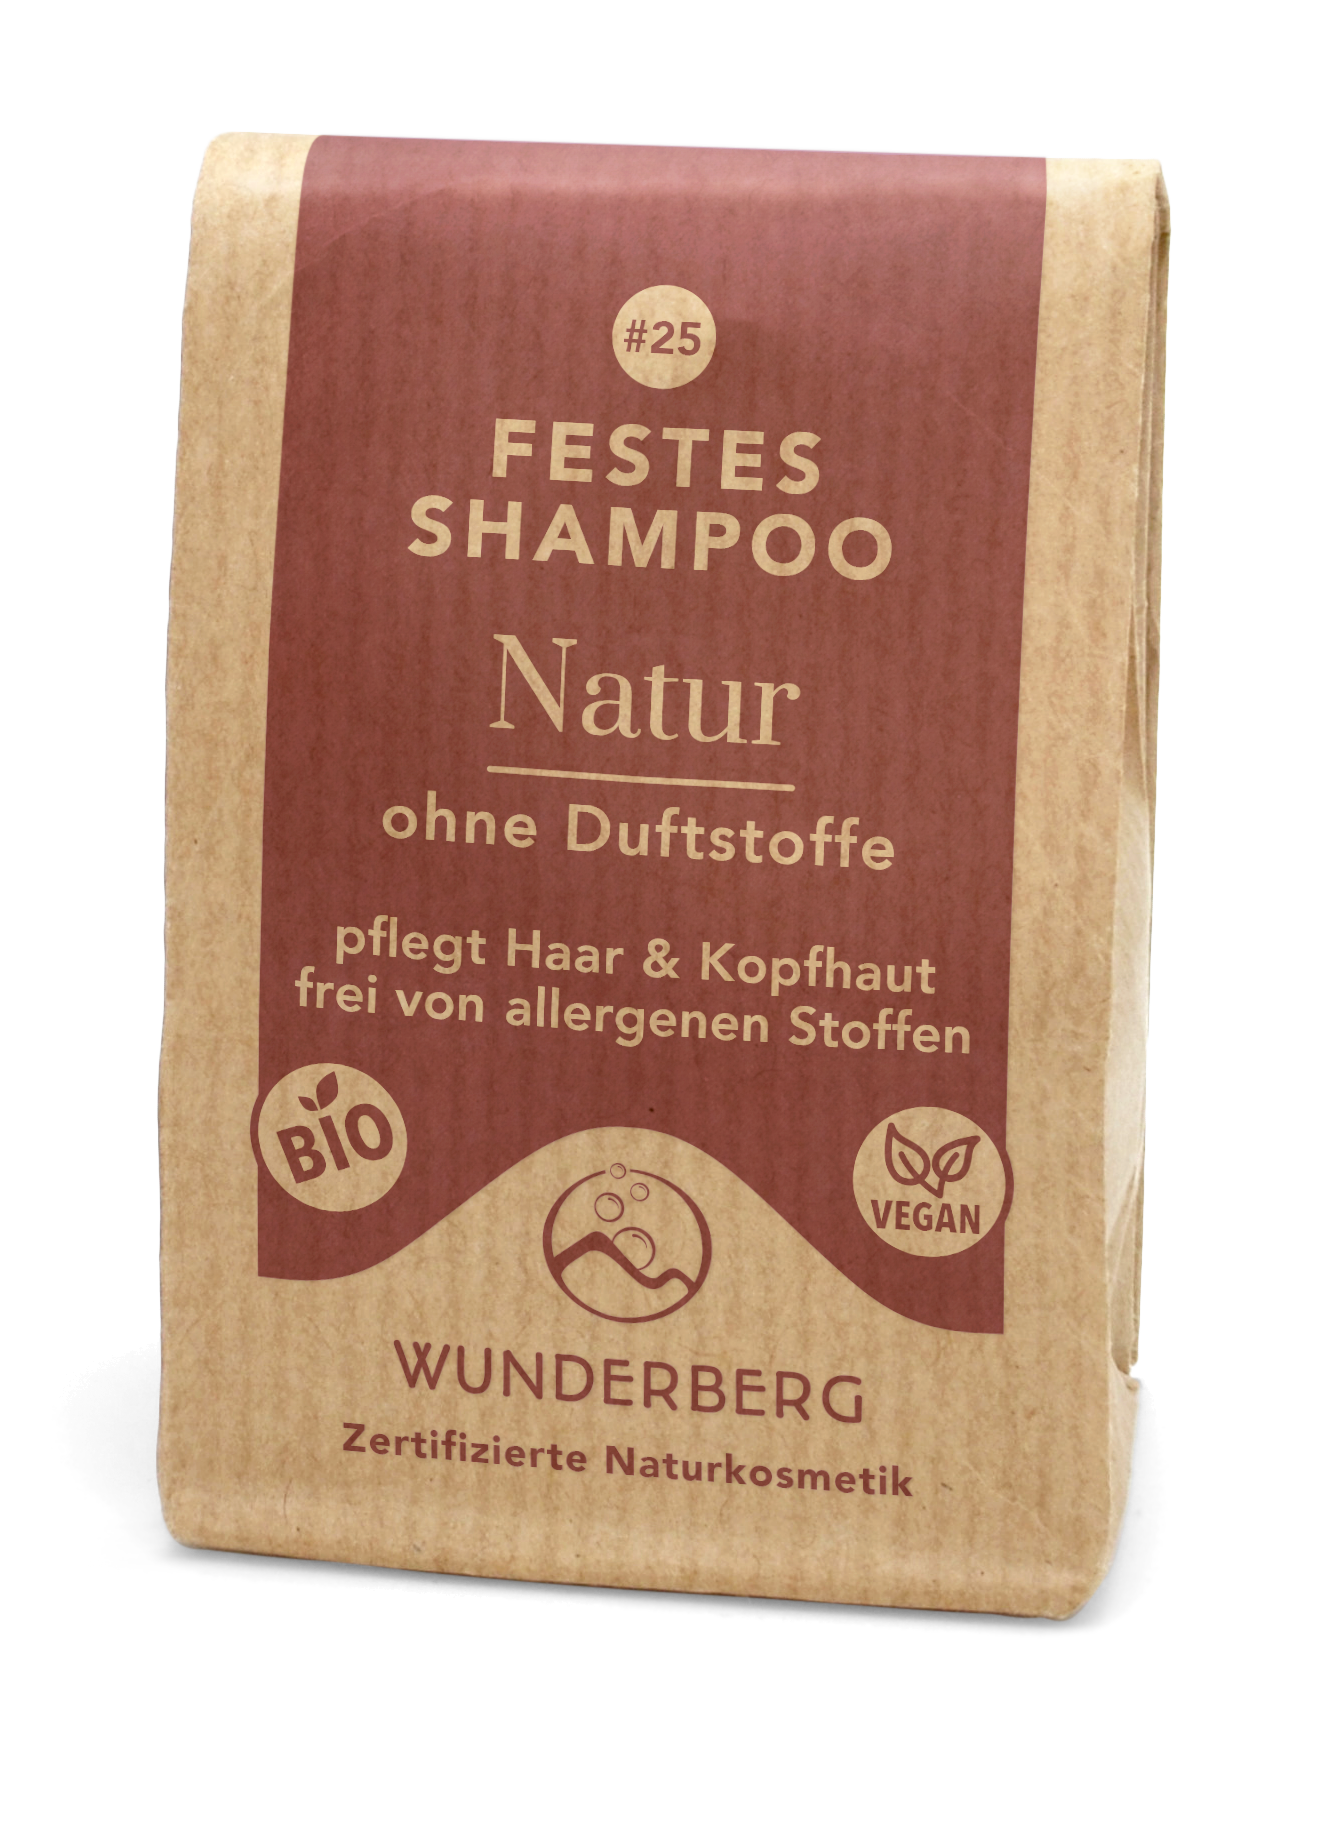 Festes Shampoo natur